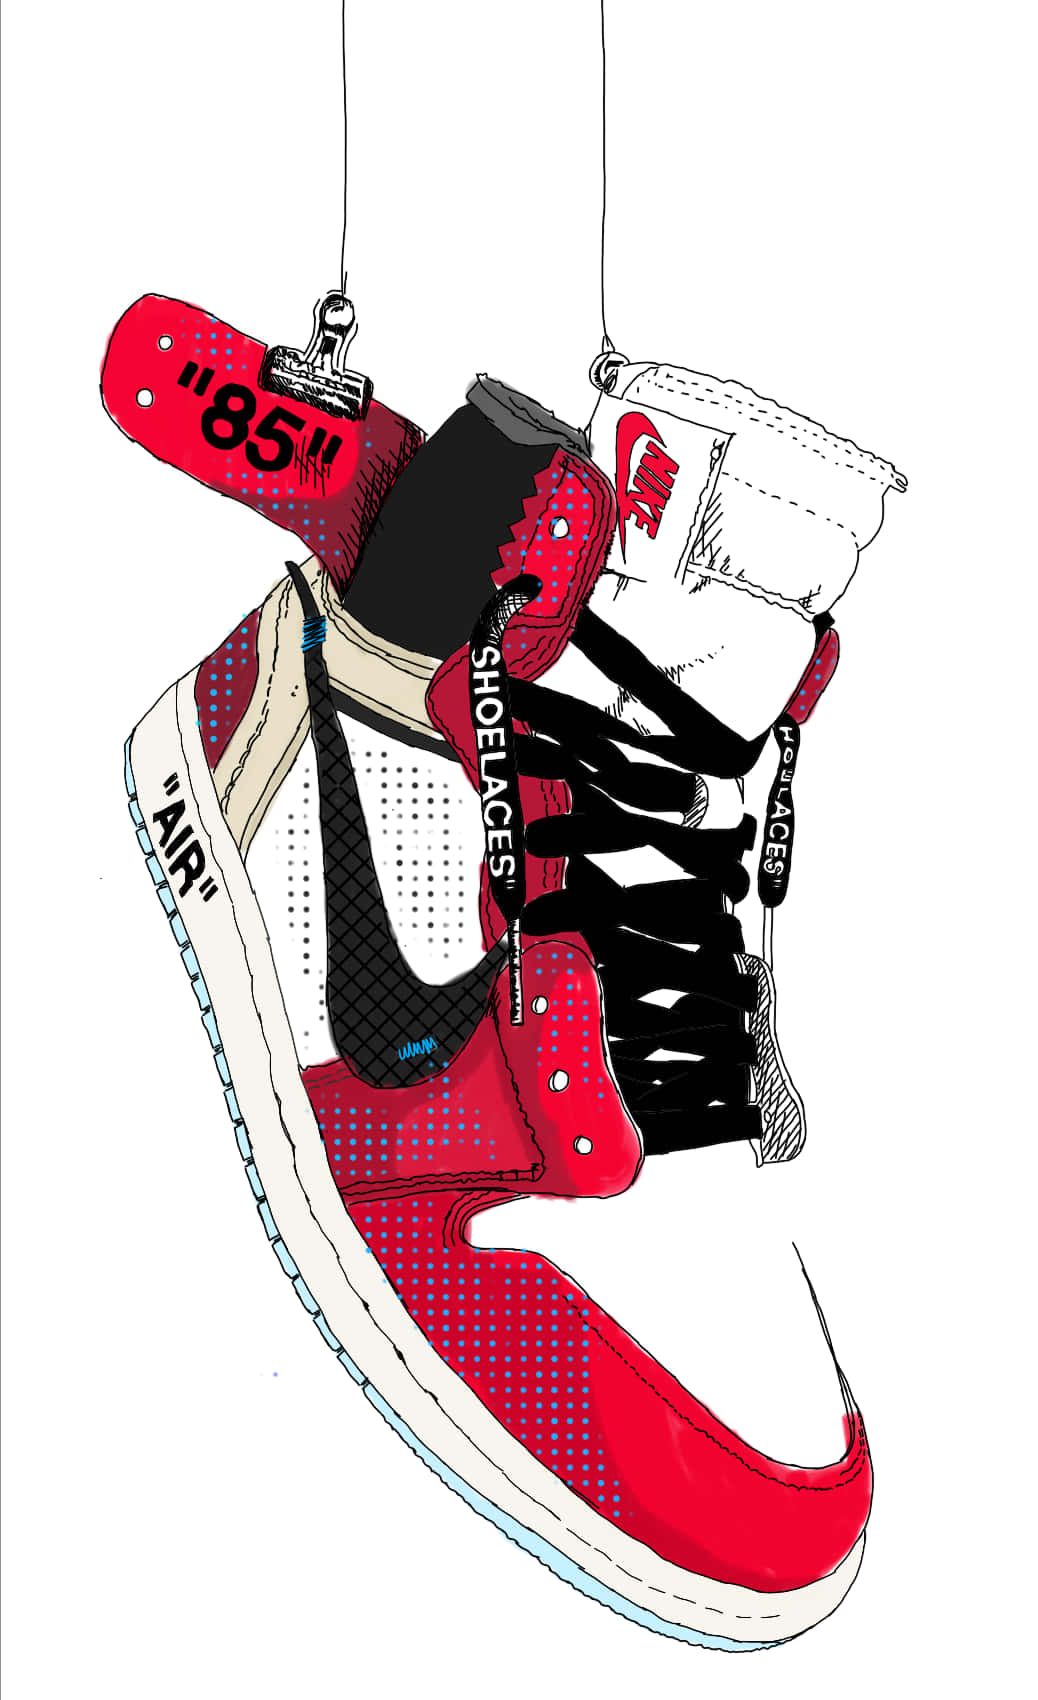 Dieikonischen Nike Air Jordan - Stilvoll Grenzen Durchbrechen Wallpaper